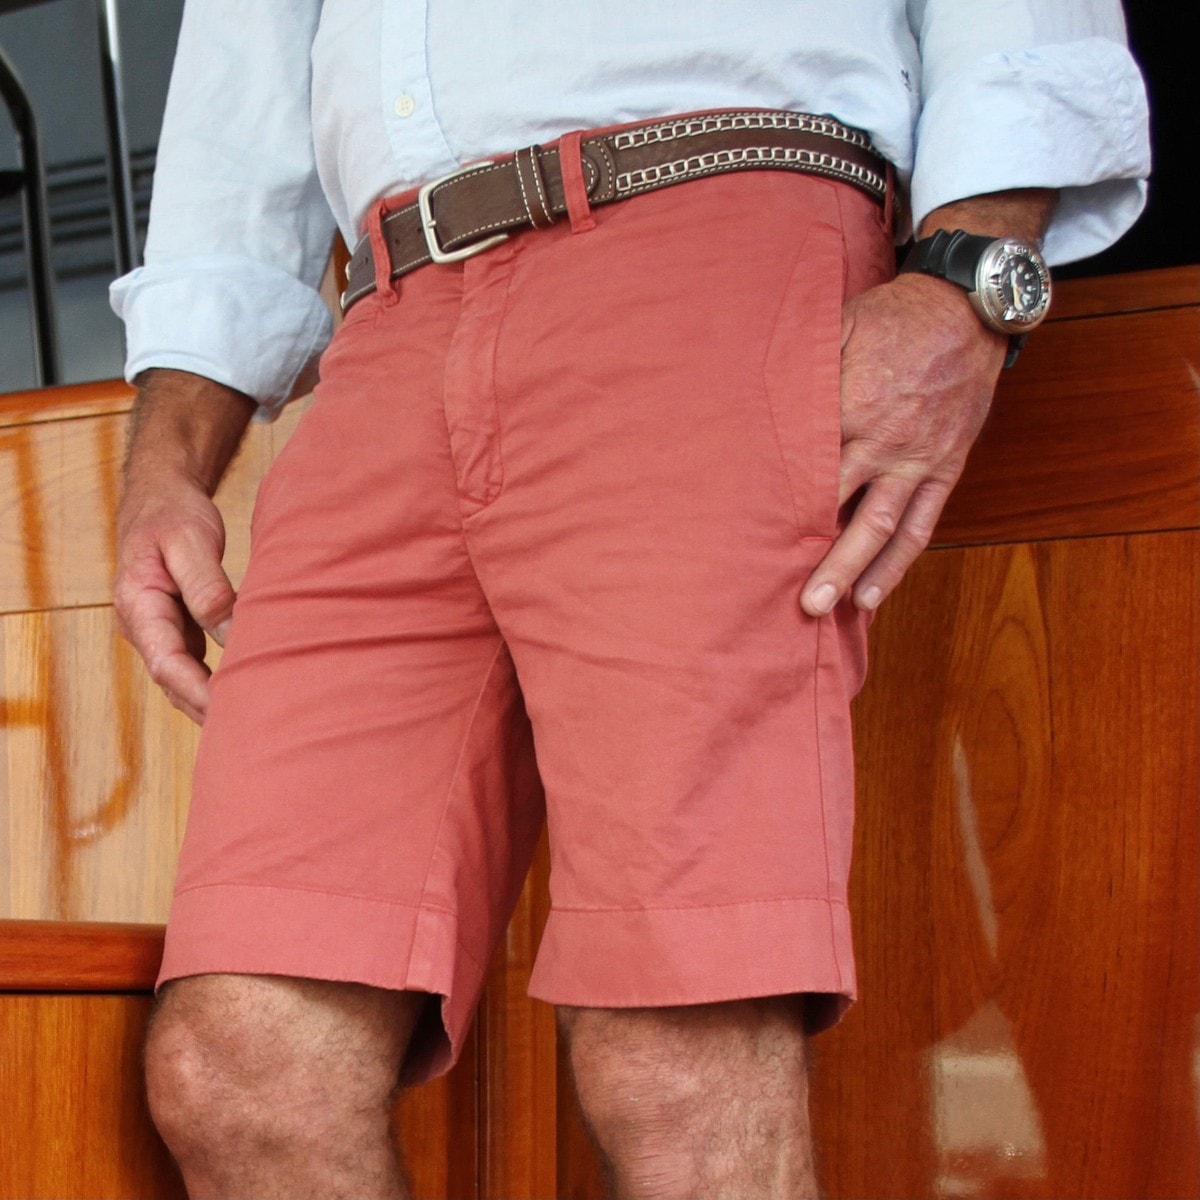 Dock Shorts - Pink